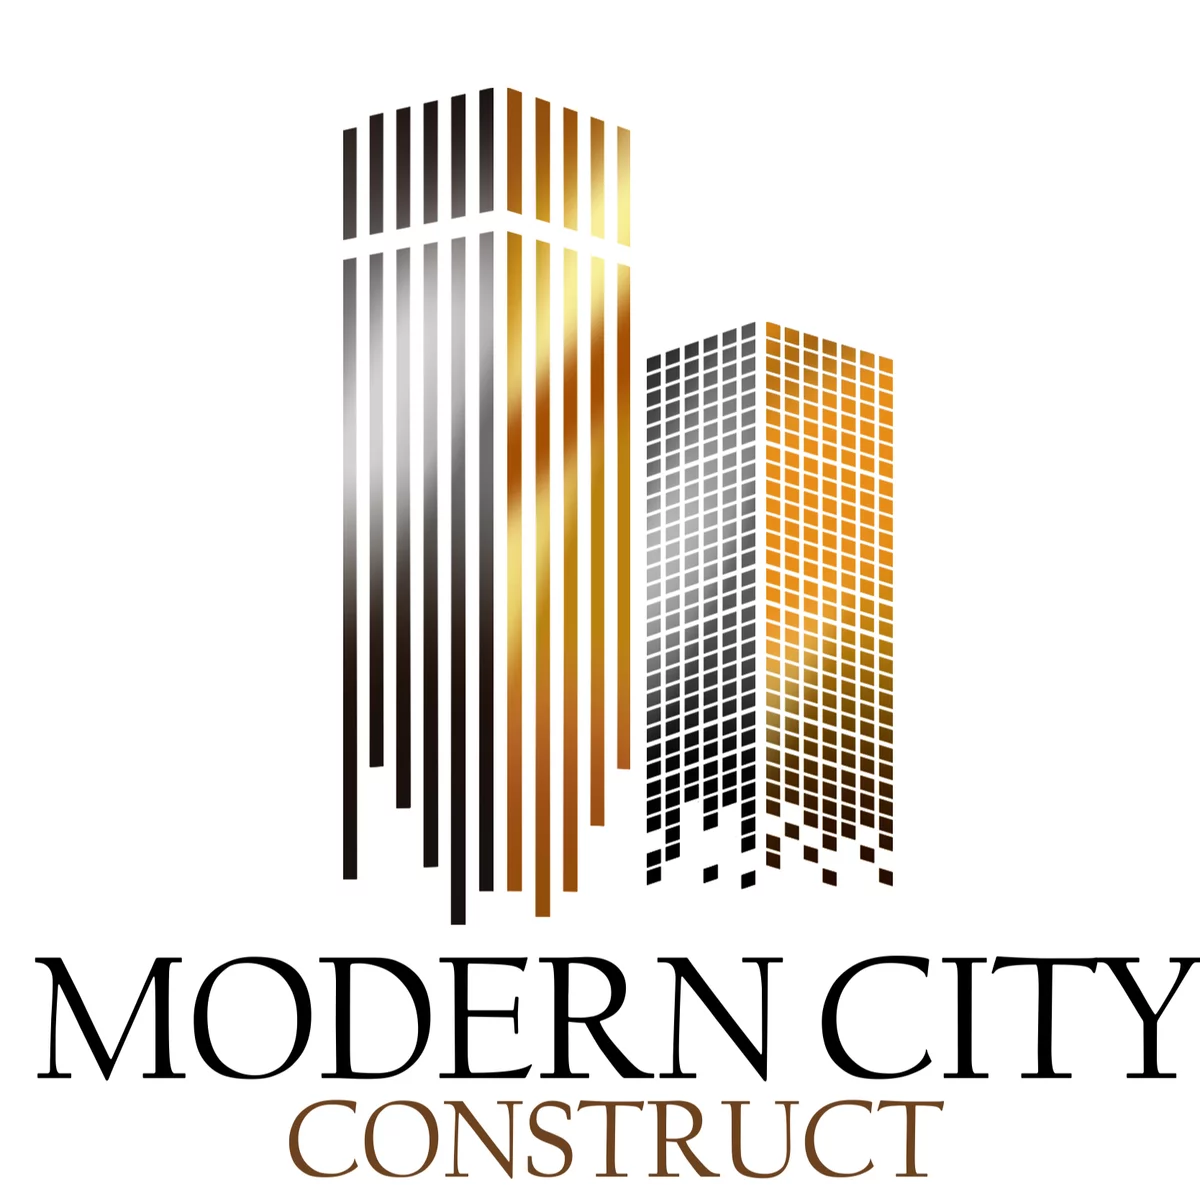 MODERN CITY CONSTRUCT